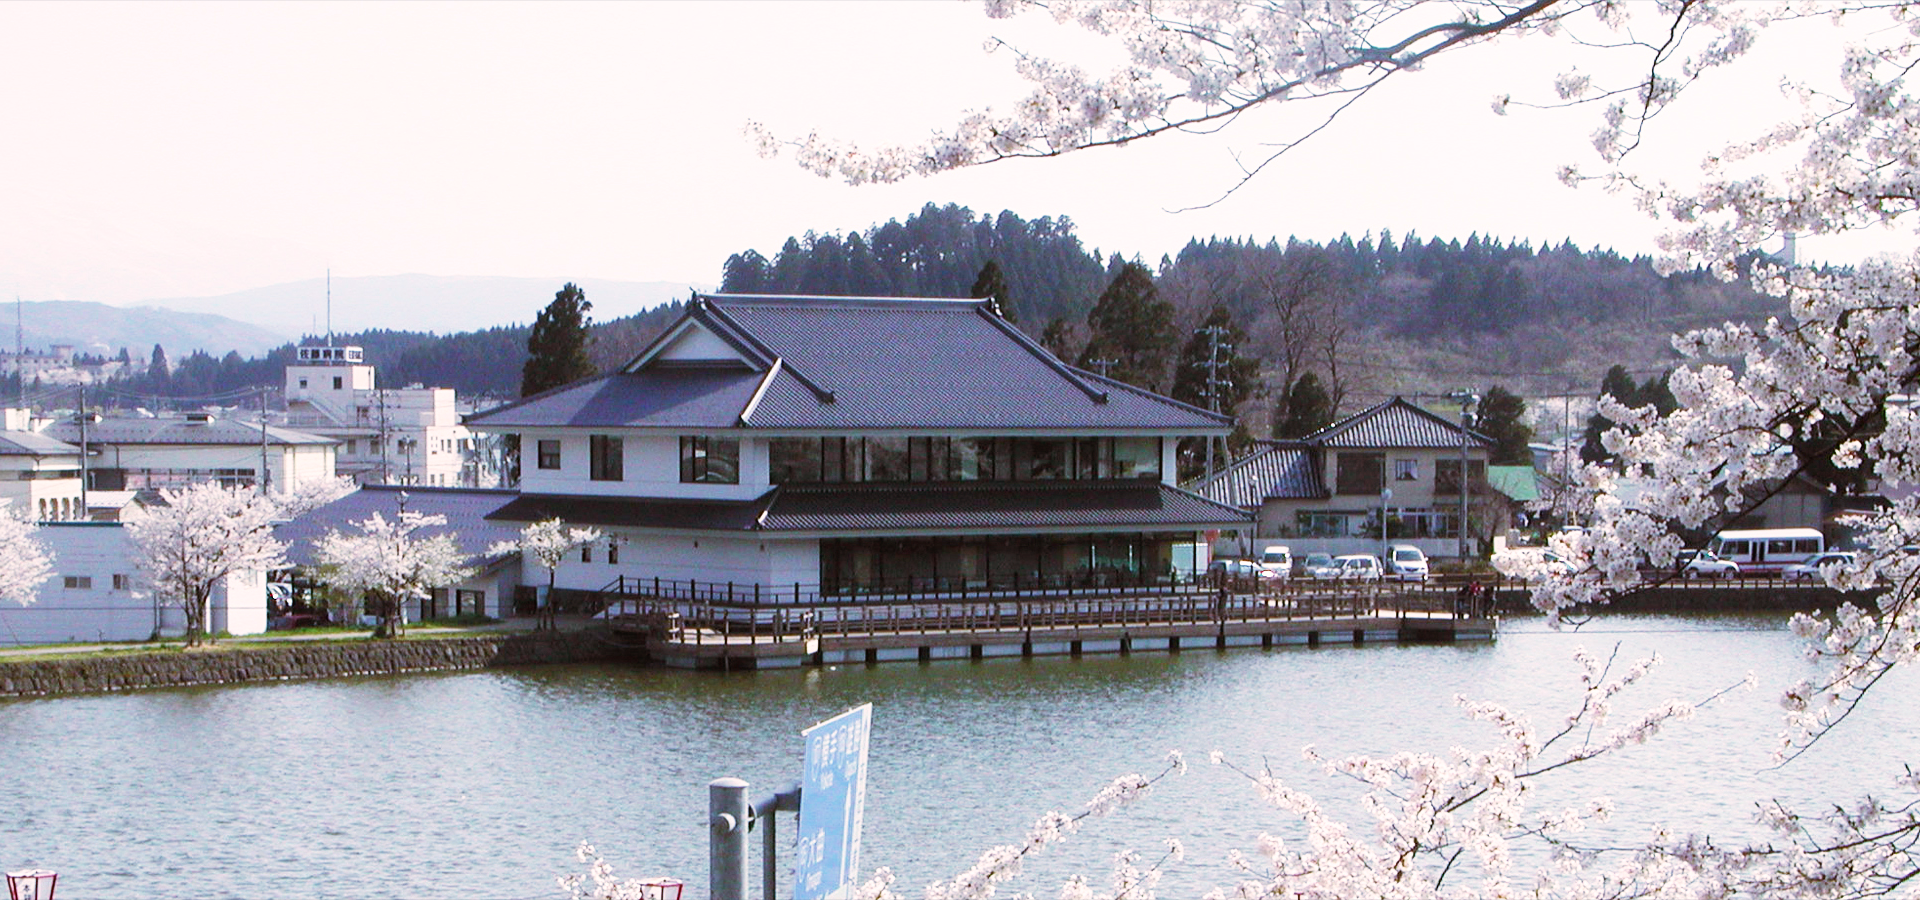 Tsuru Mai Onsen Distinctive Japanese-style Architecture with Castle-like Exterior!